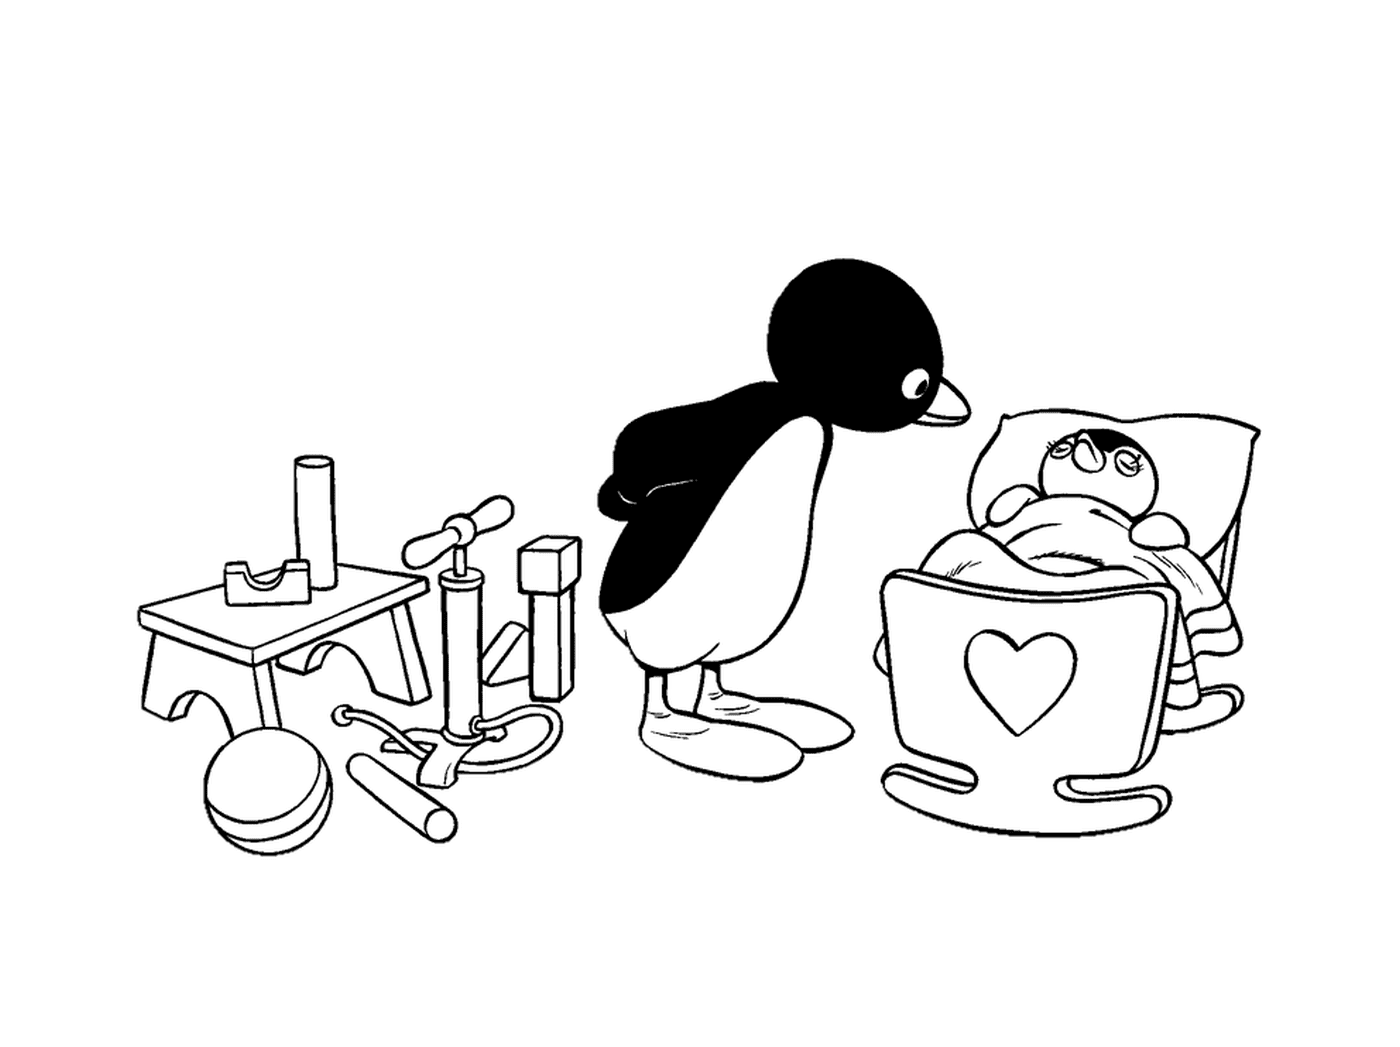  Pingüino y pingüino bebé en un tazón 